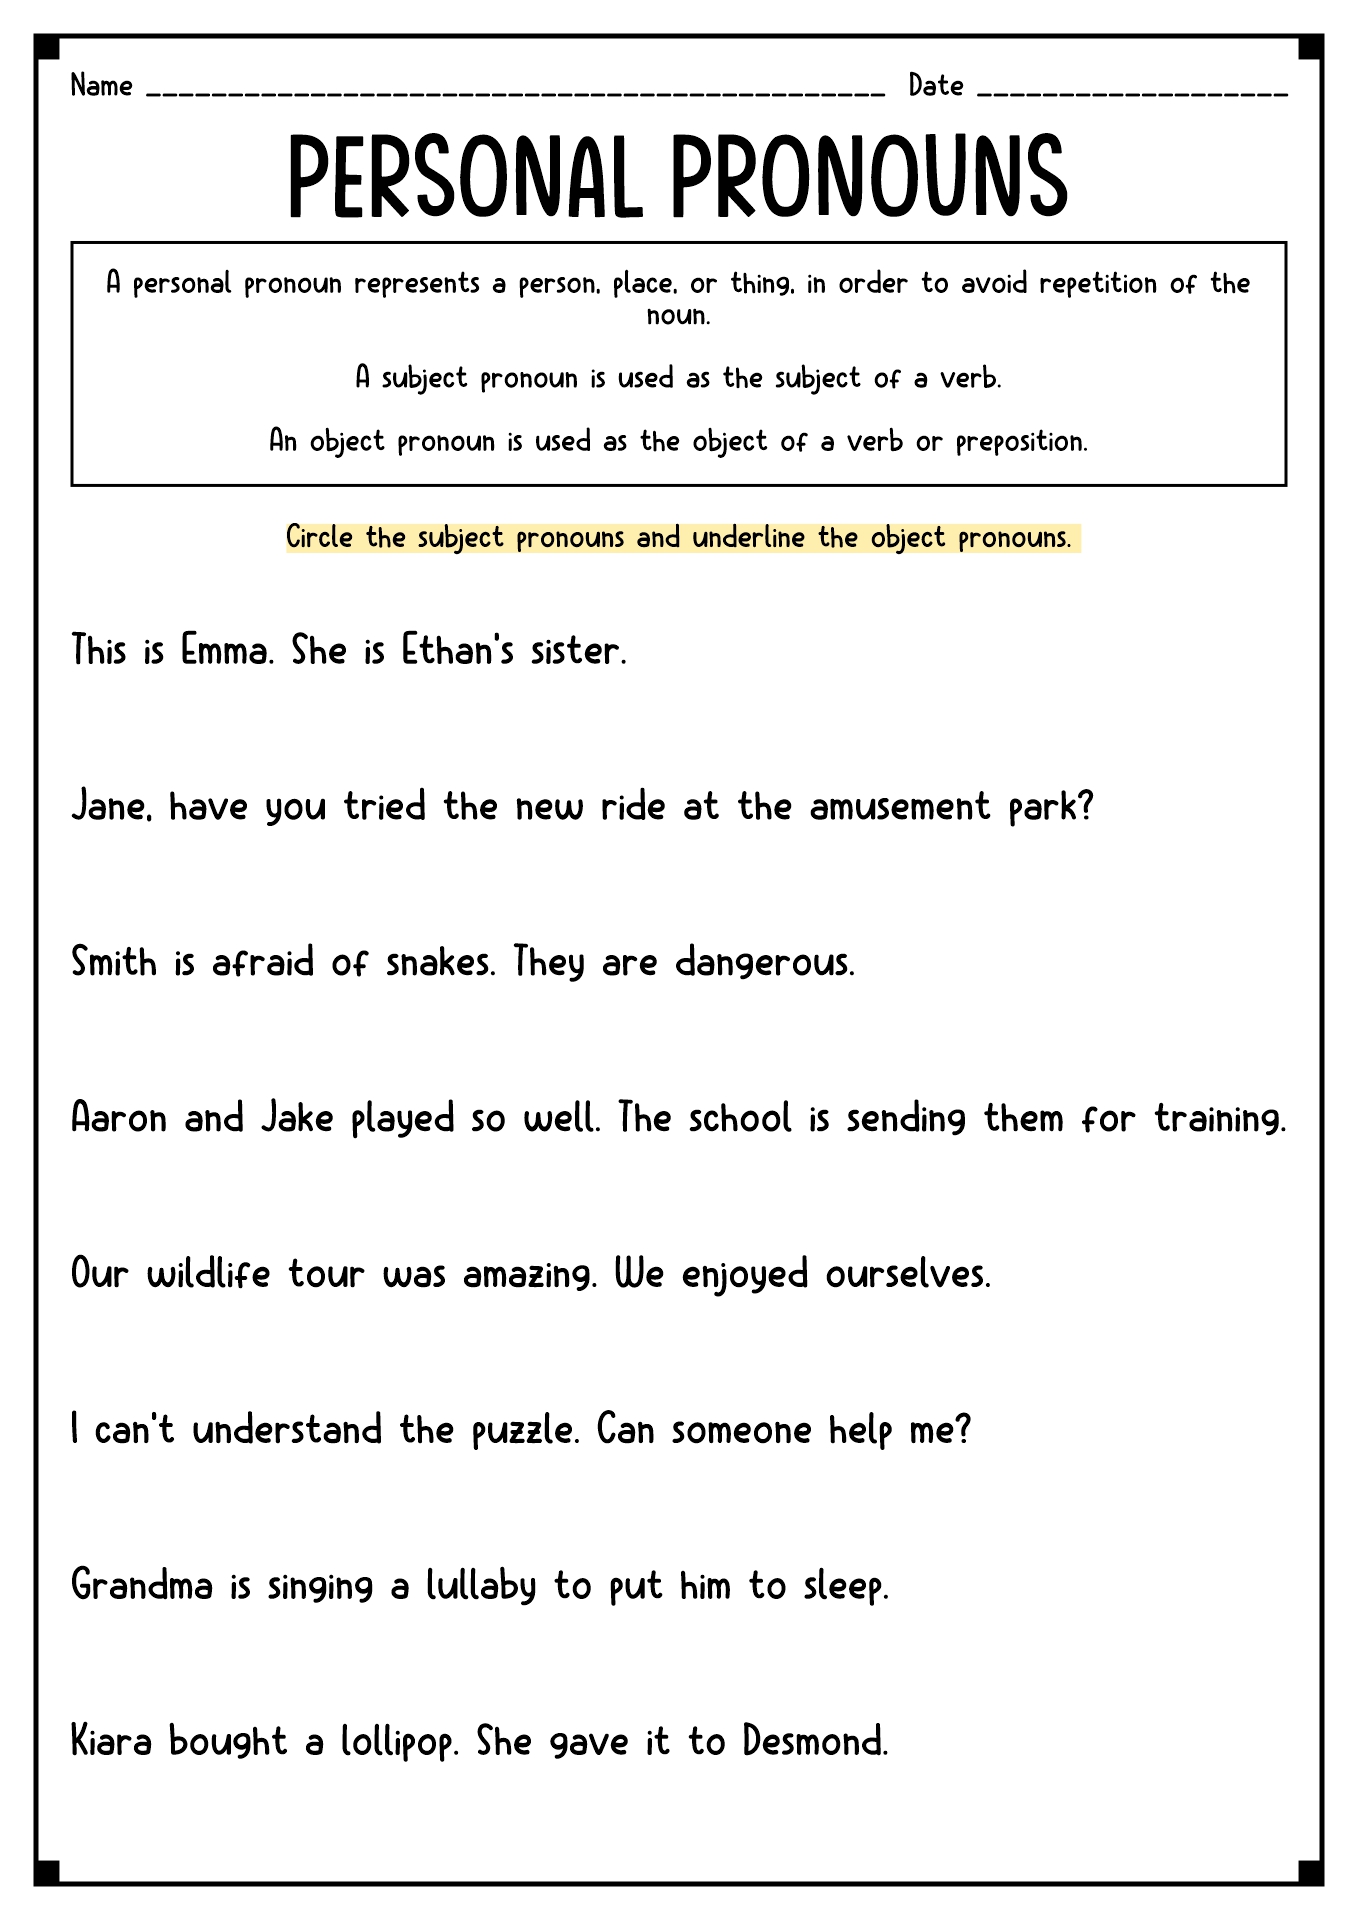 English Language Arts Worksheets 6th Grade Image